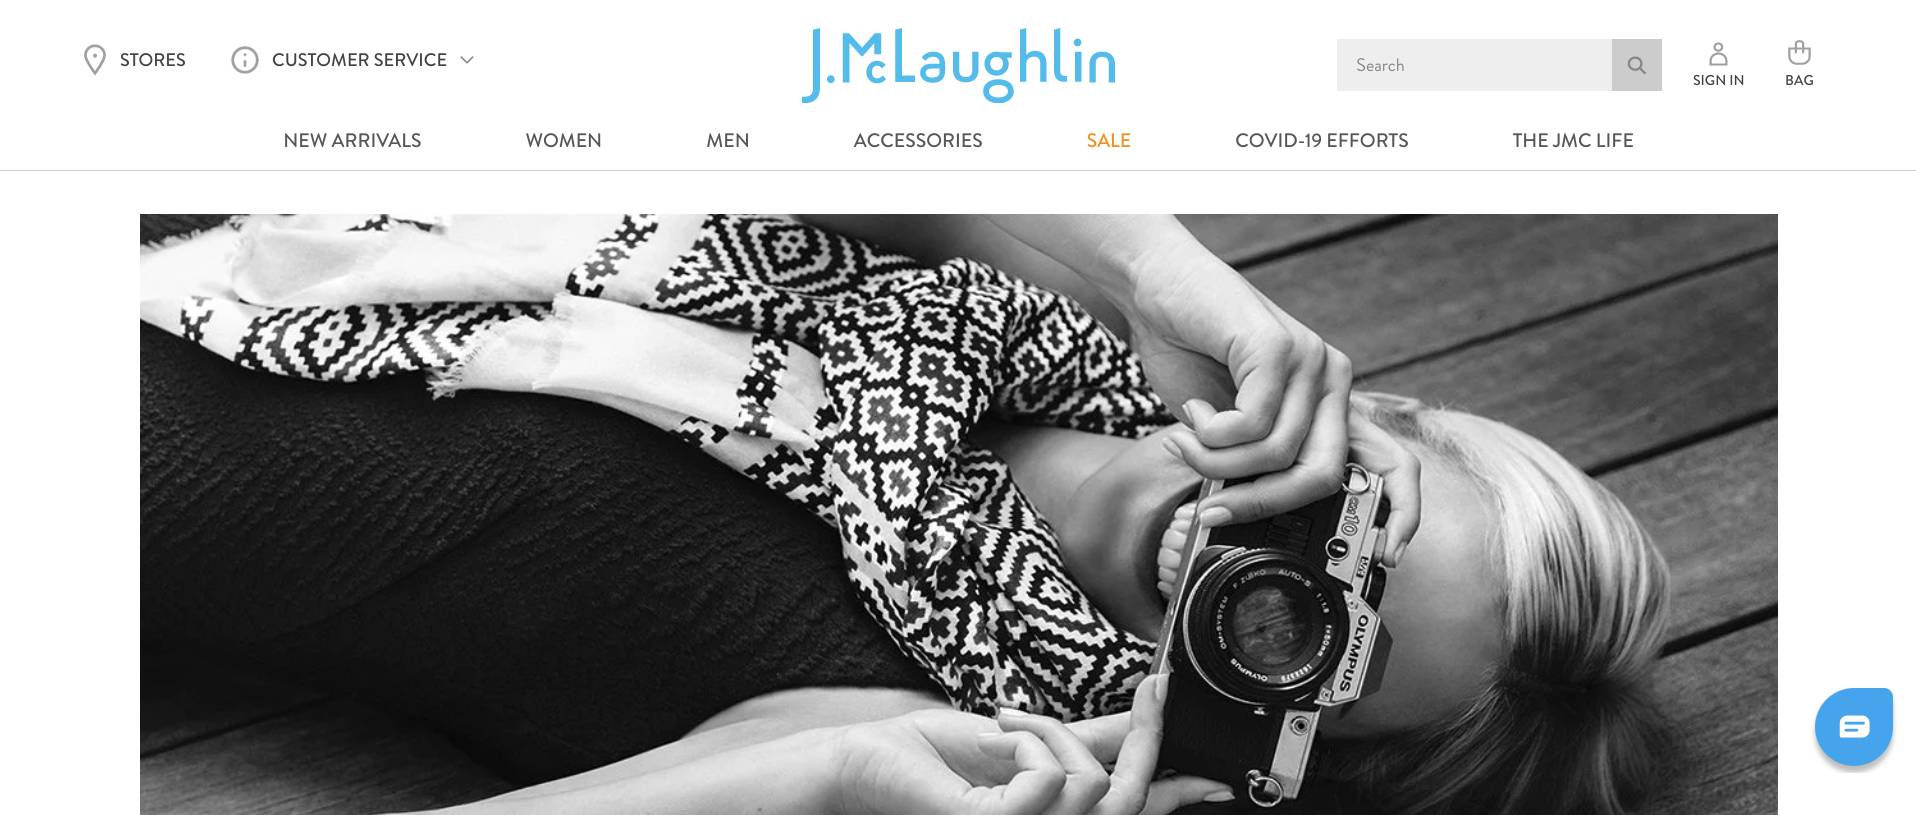 j mclaughlin affiliate program- fashion affiliate programs